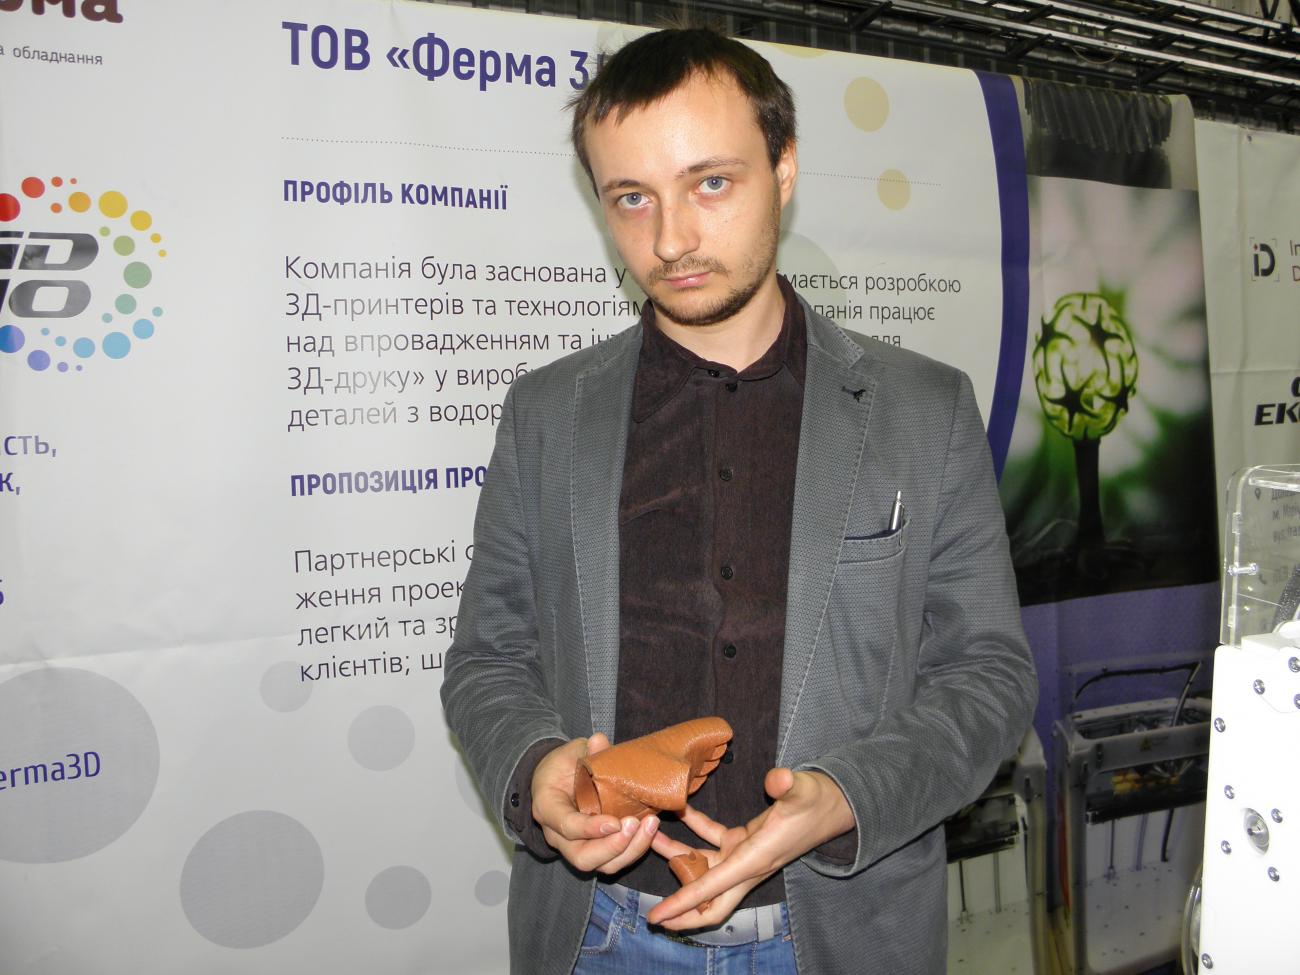 Director of the "3D Farm" Bogdan Tristan